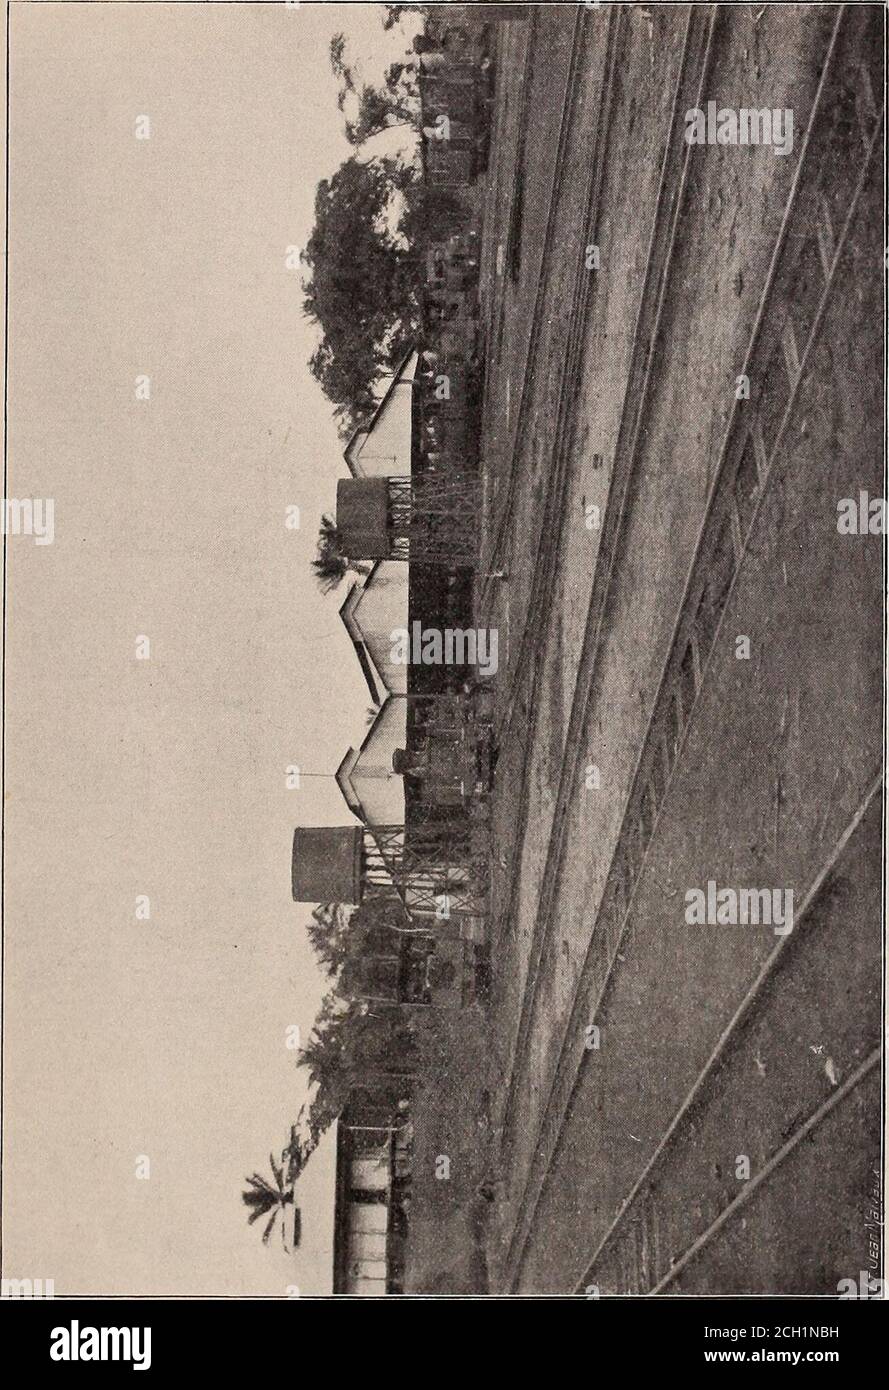 File:Le chemin de fer du Congo (Matadi-Stanley-Pool) (1907